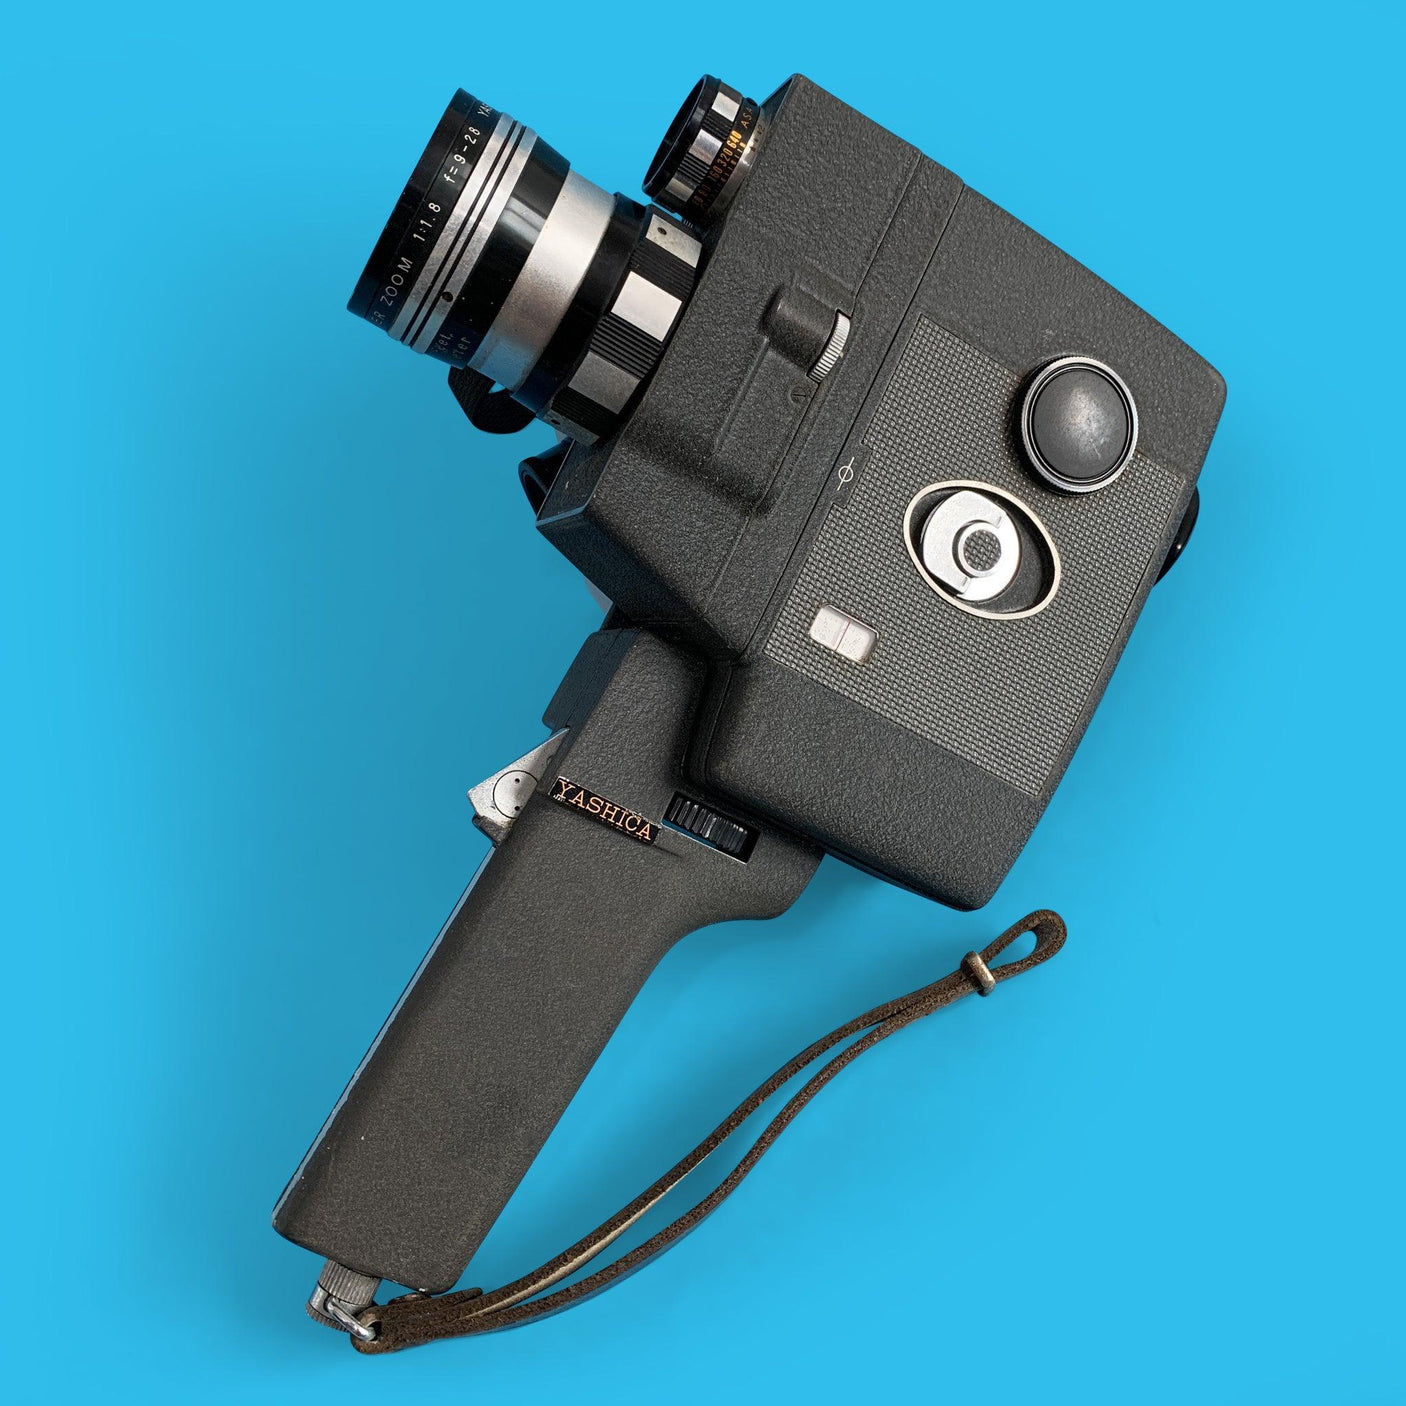 Yashica UP 8mm Movie Cine Camera